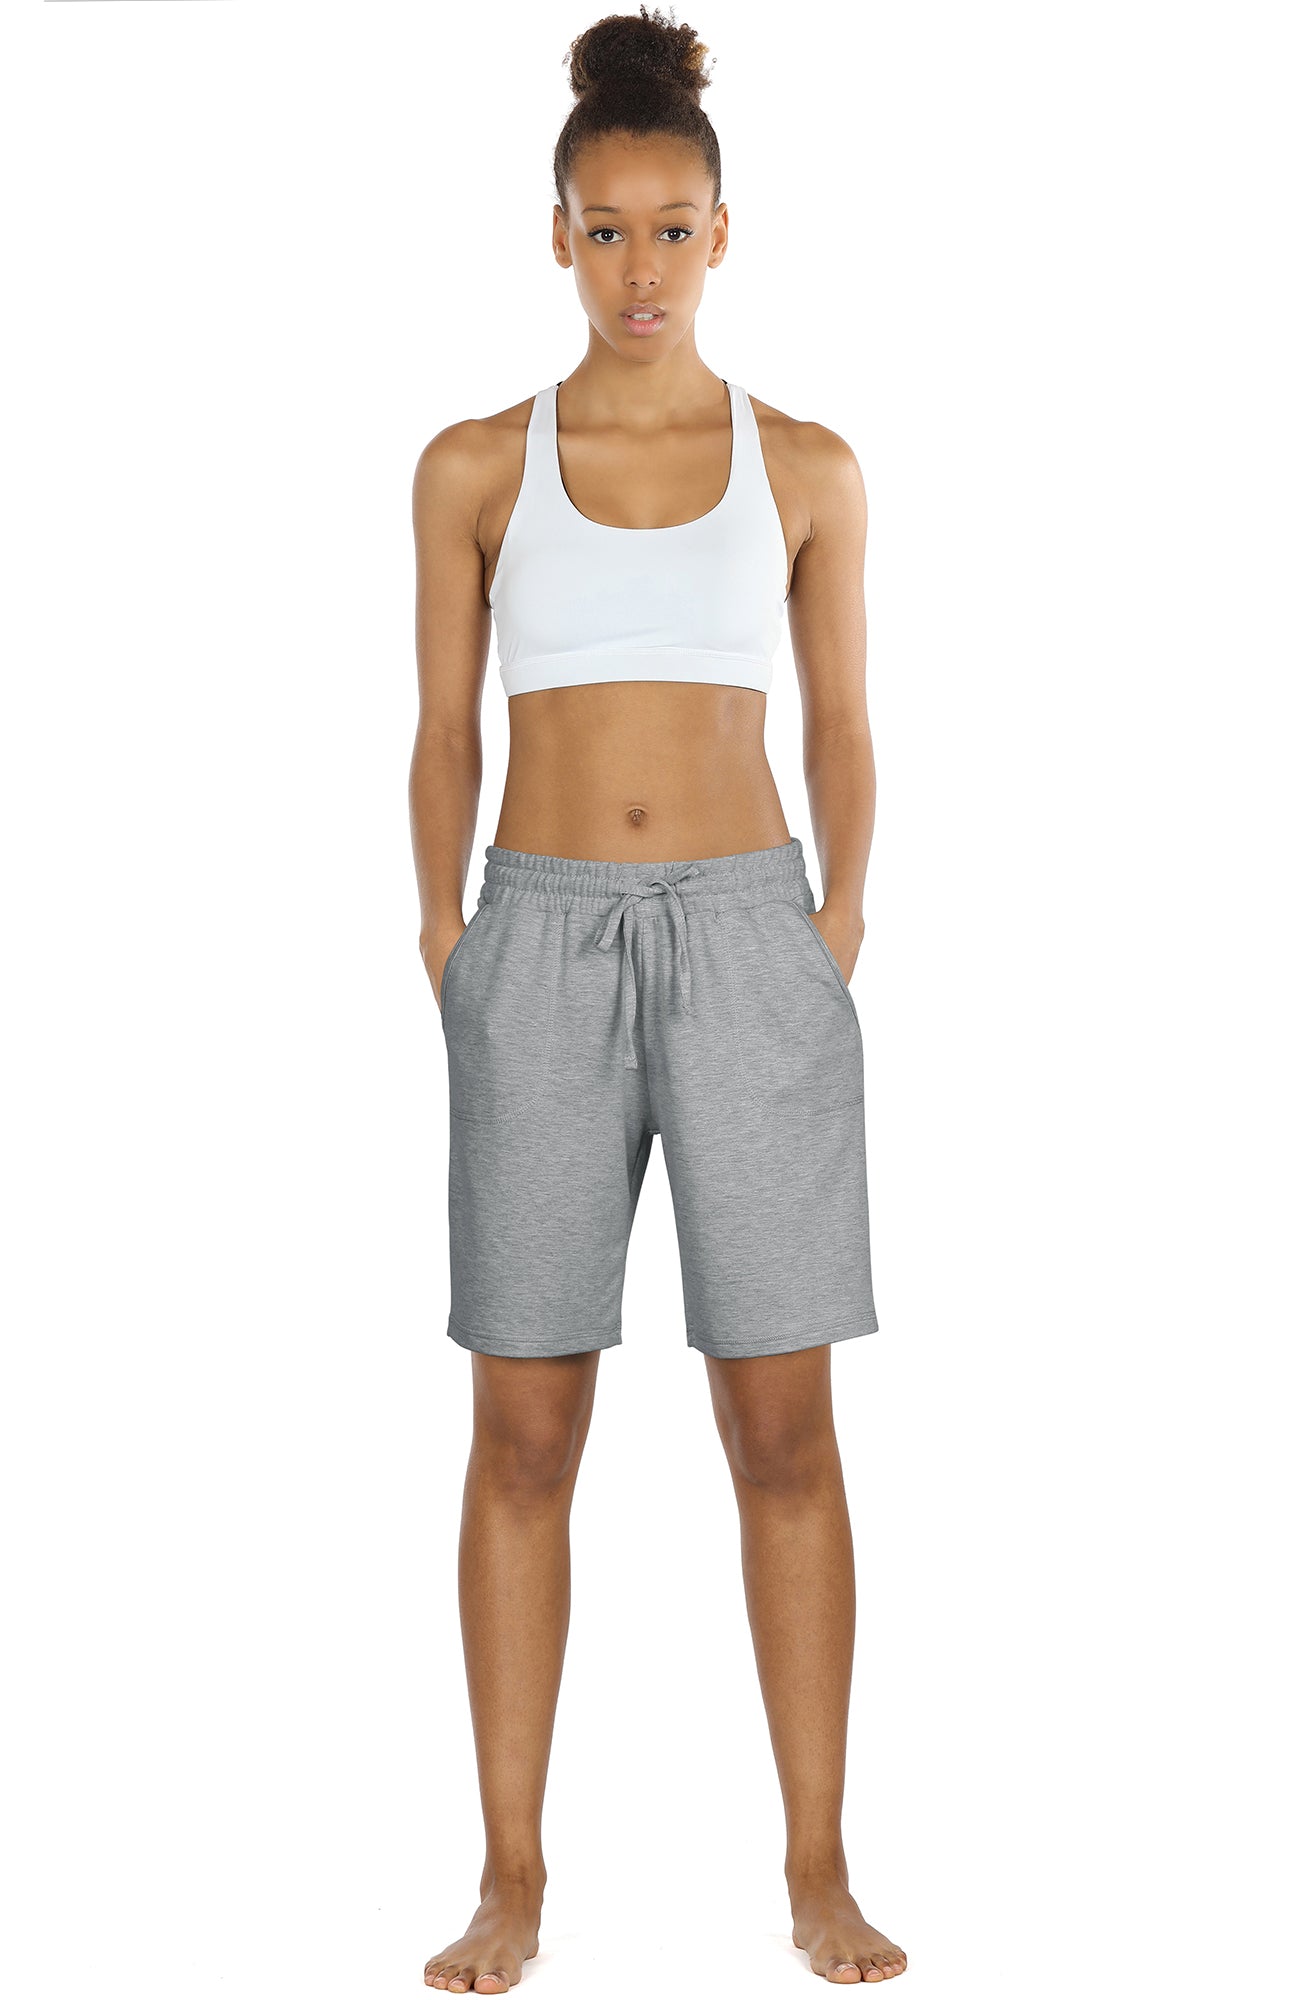 SP12 icyzone Workout Shorts for Women - Activewear Exercise Athletic  Running Yoga Shorts